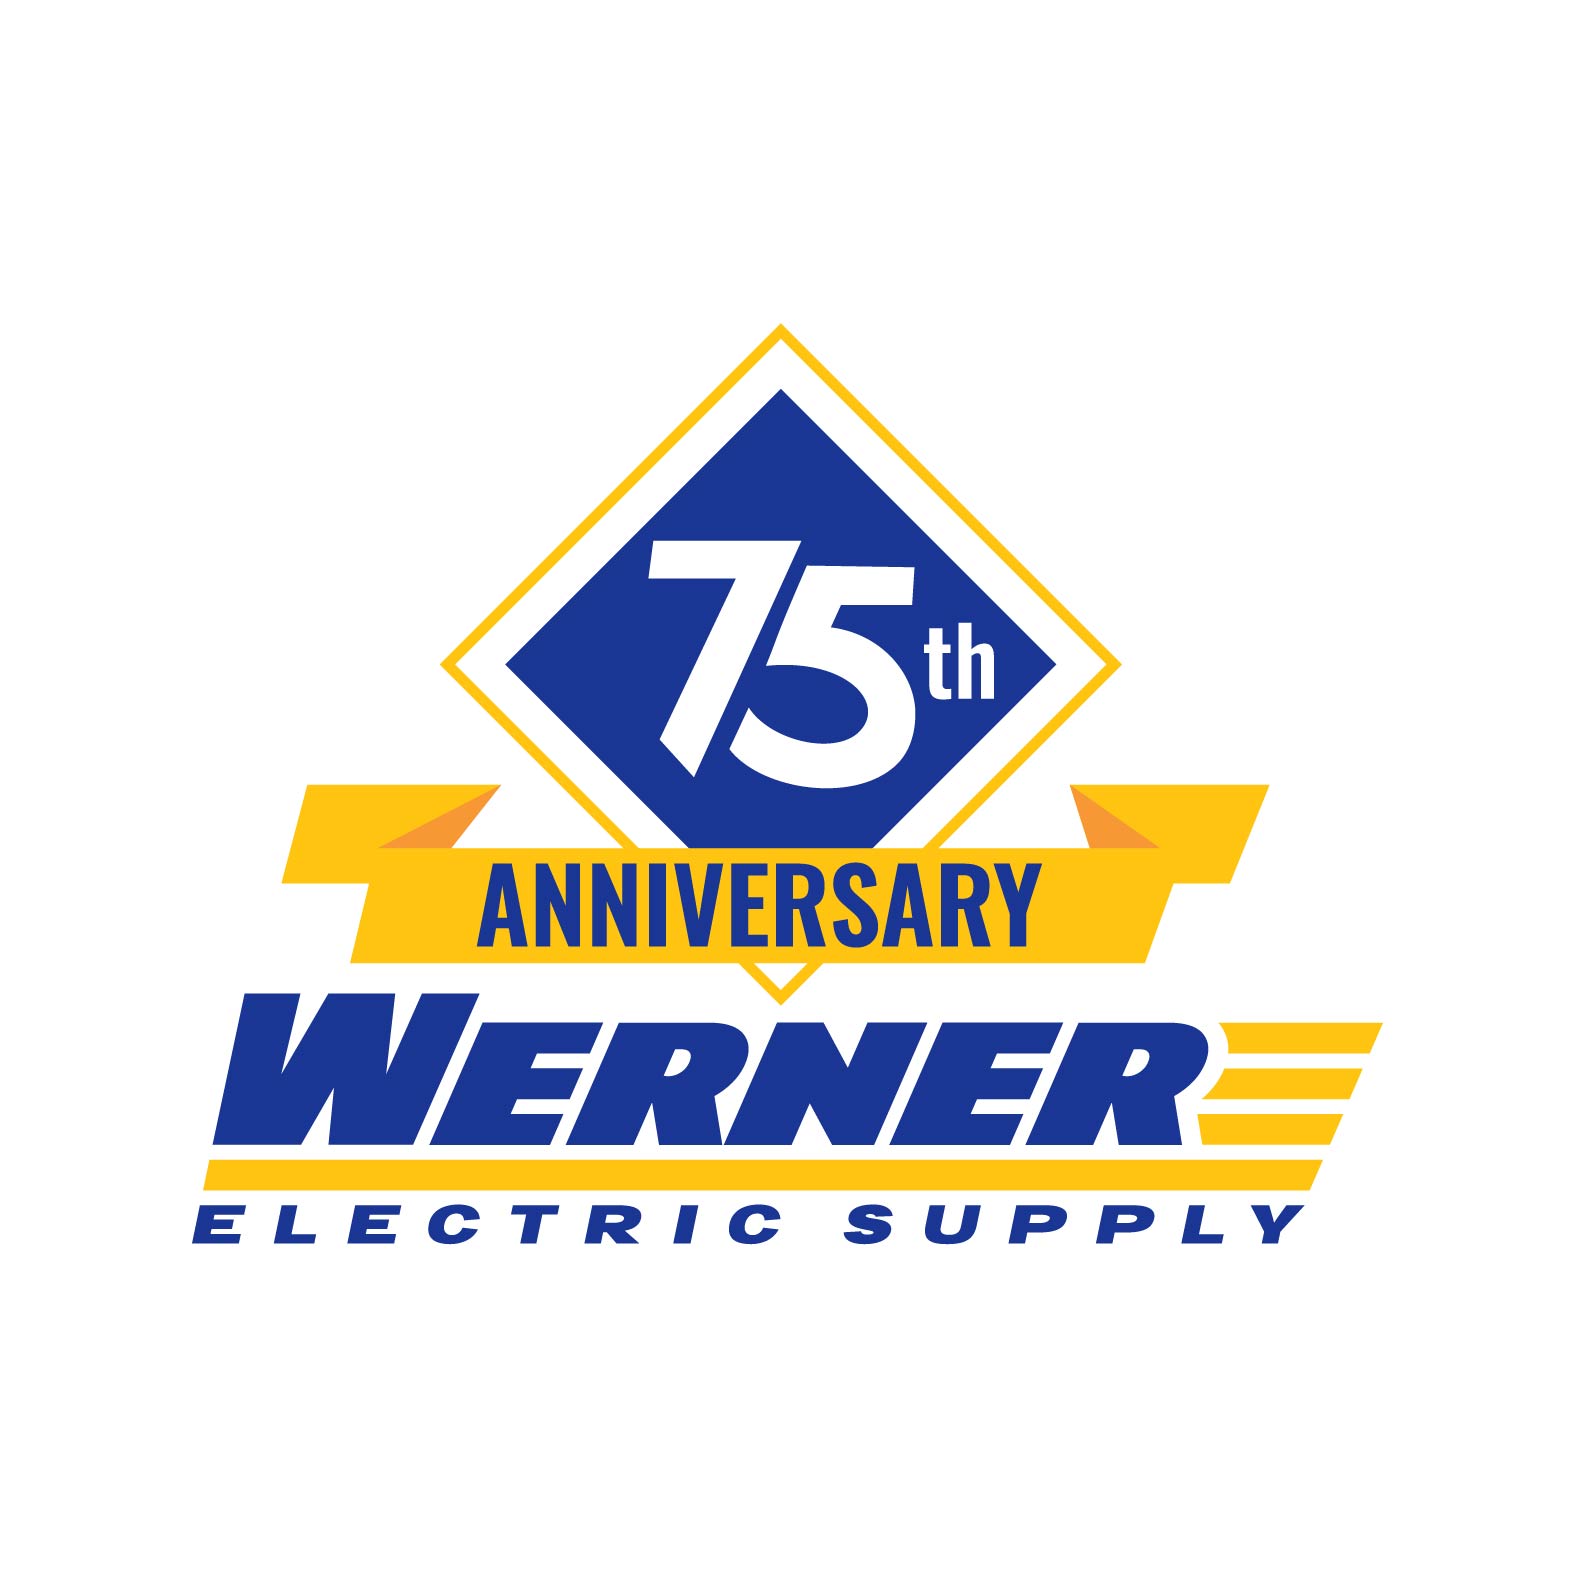 Werner Electric logo